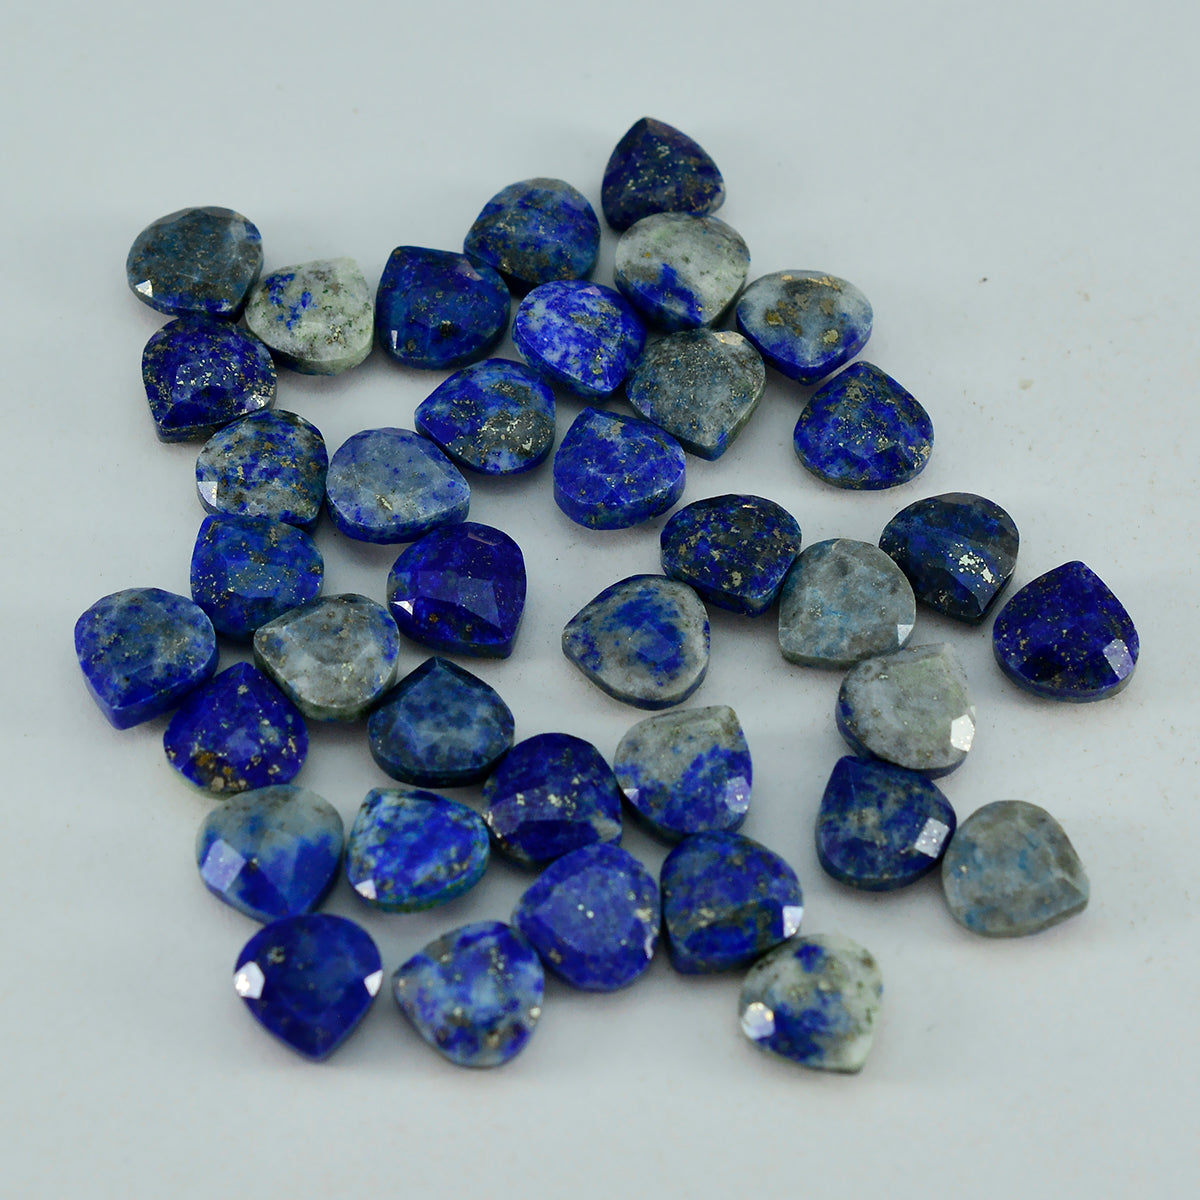 Riyogems, 1 pieza, lapislázuli azul natural facetado, 12x12mm, forma de corazón, piedra de calidad increíble